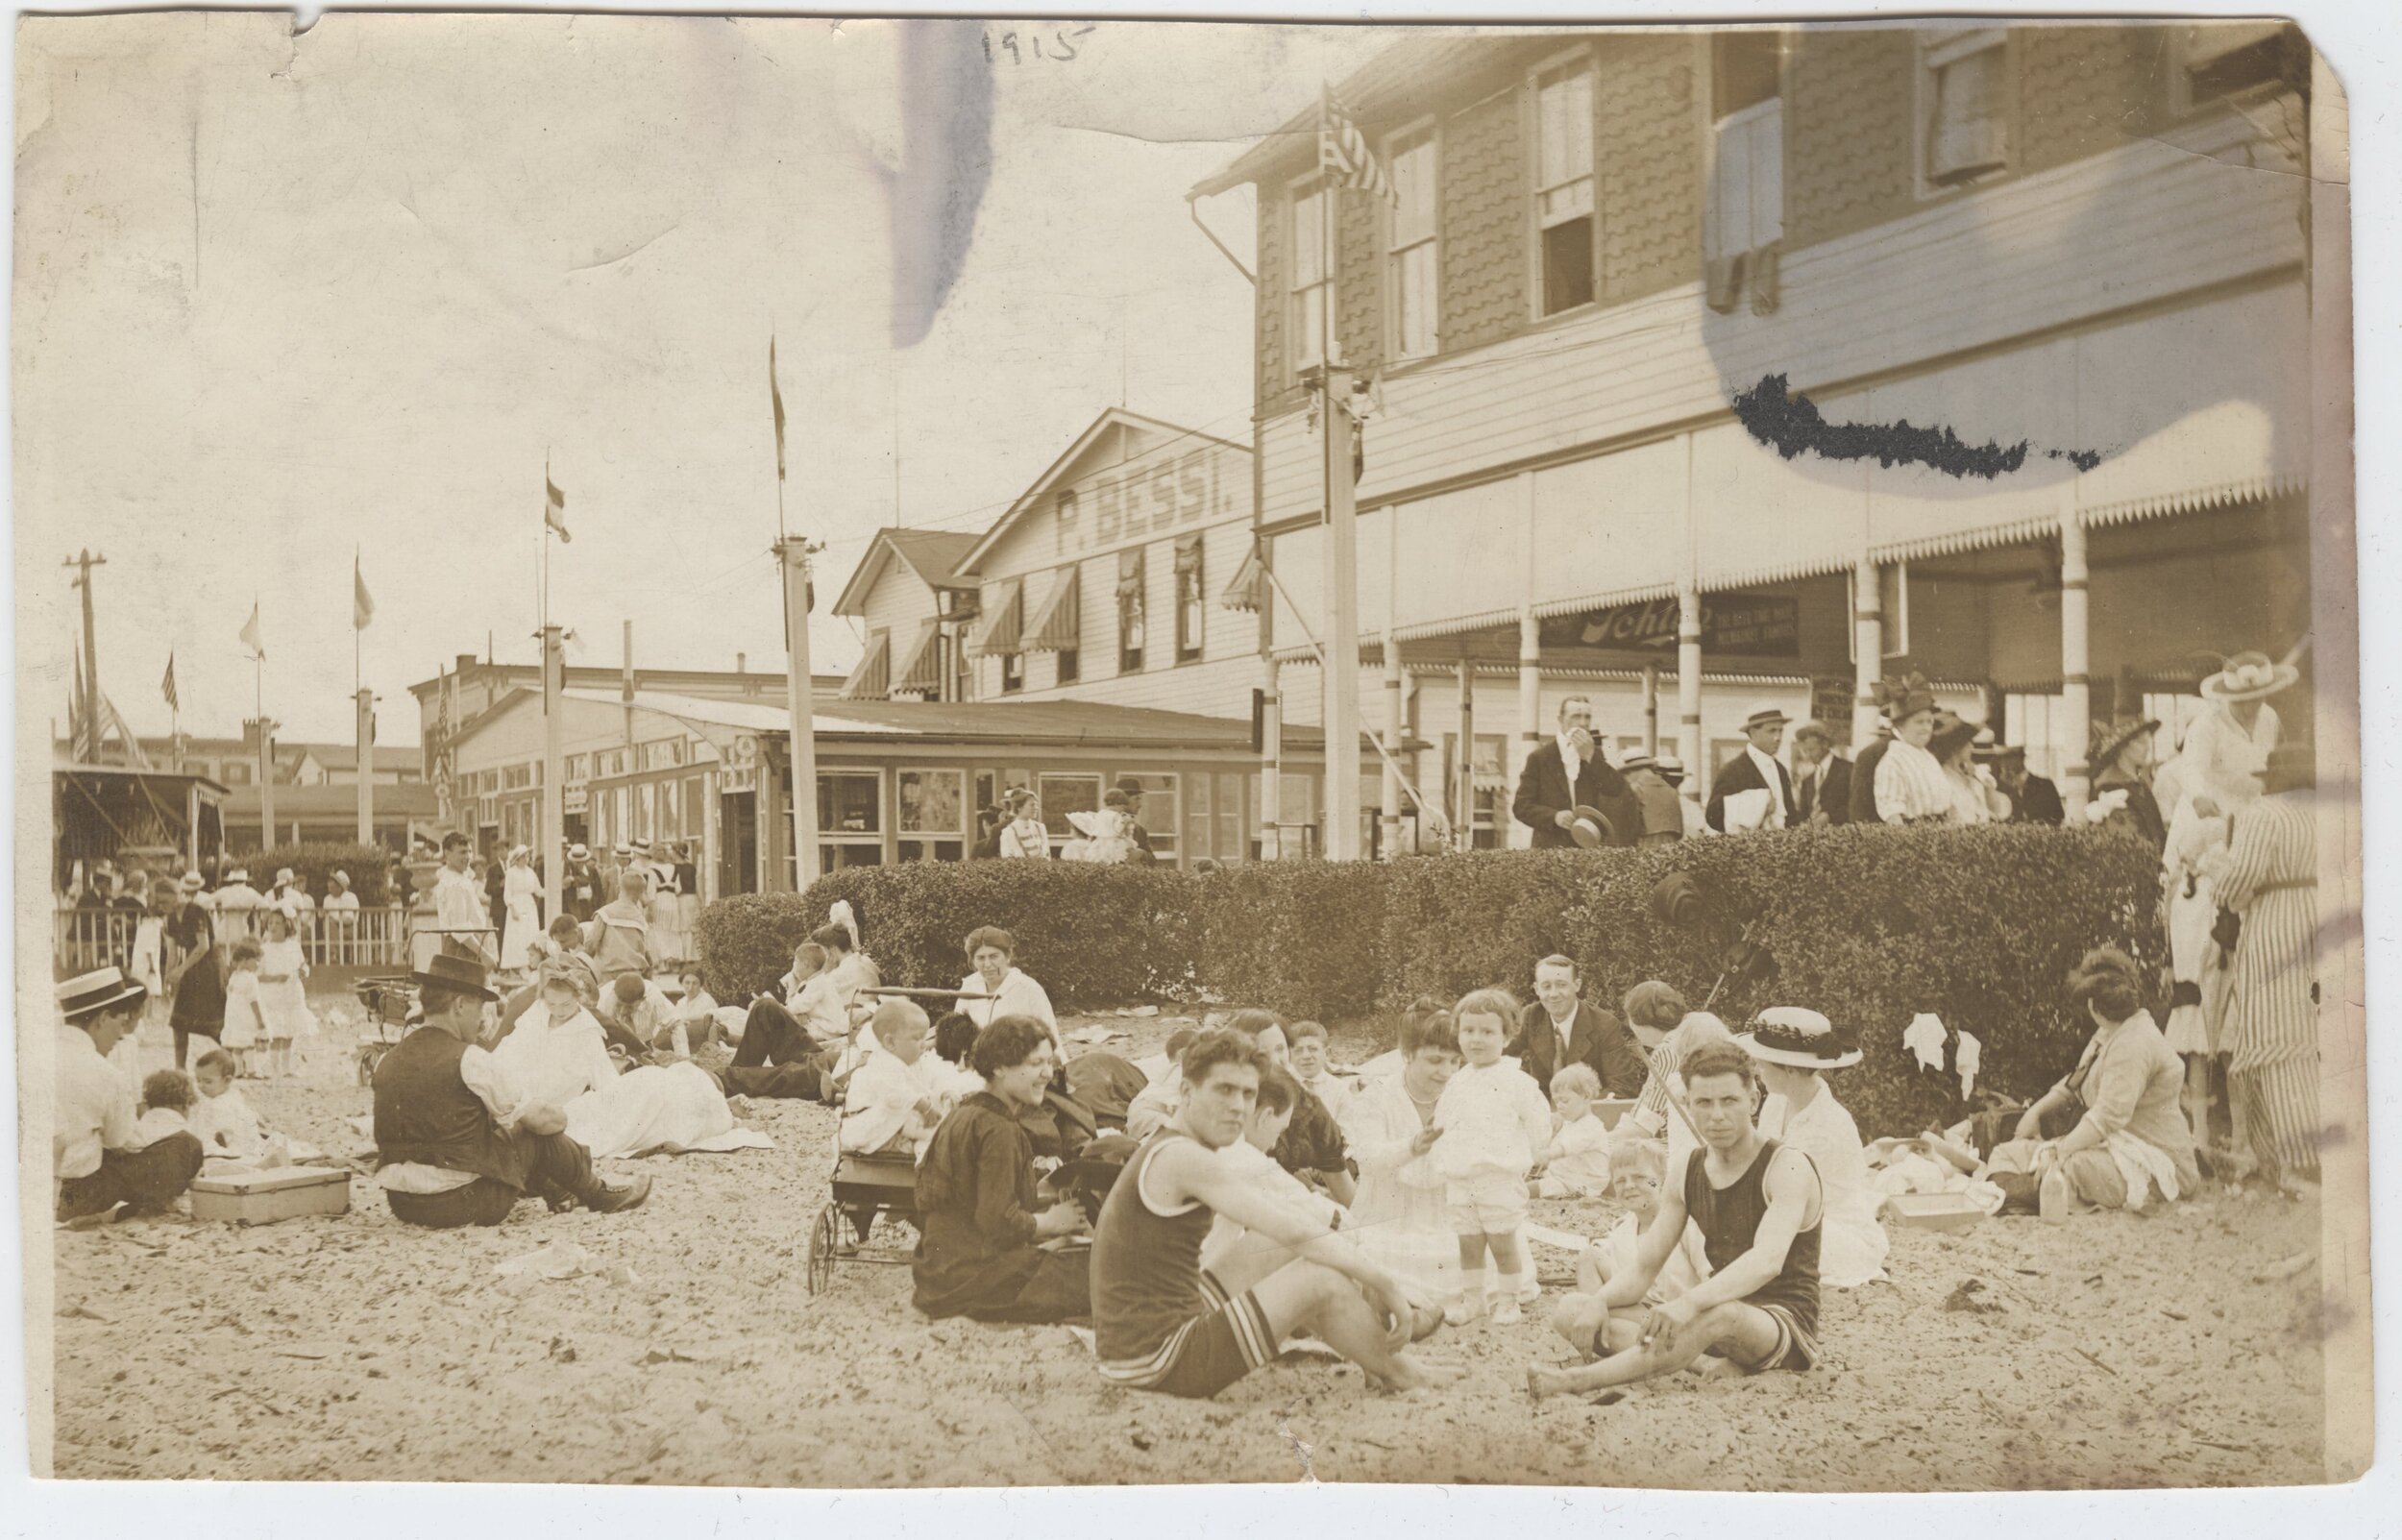  P. Bessi’s Pavilion, South Beach, Staten Island, 1915. 